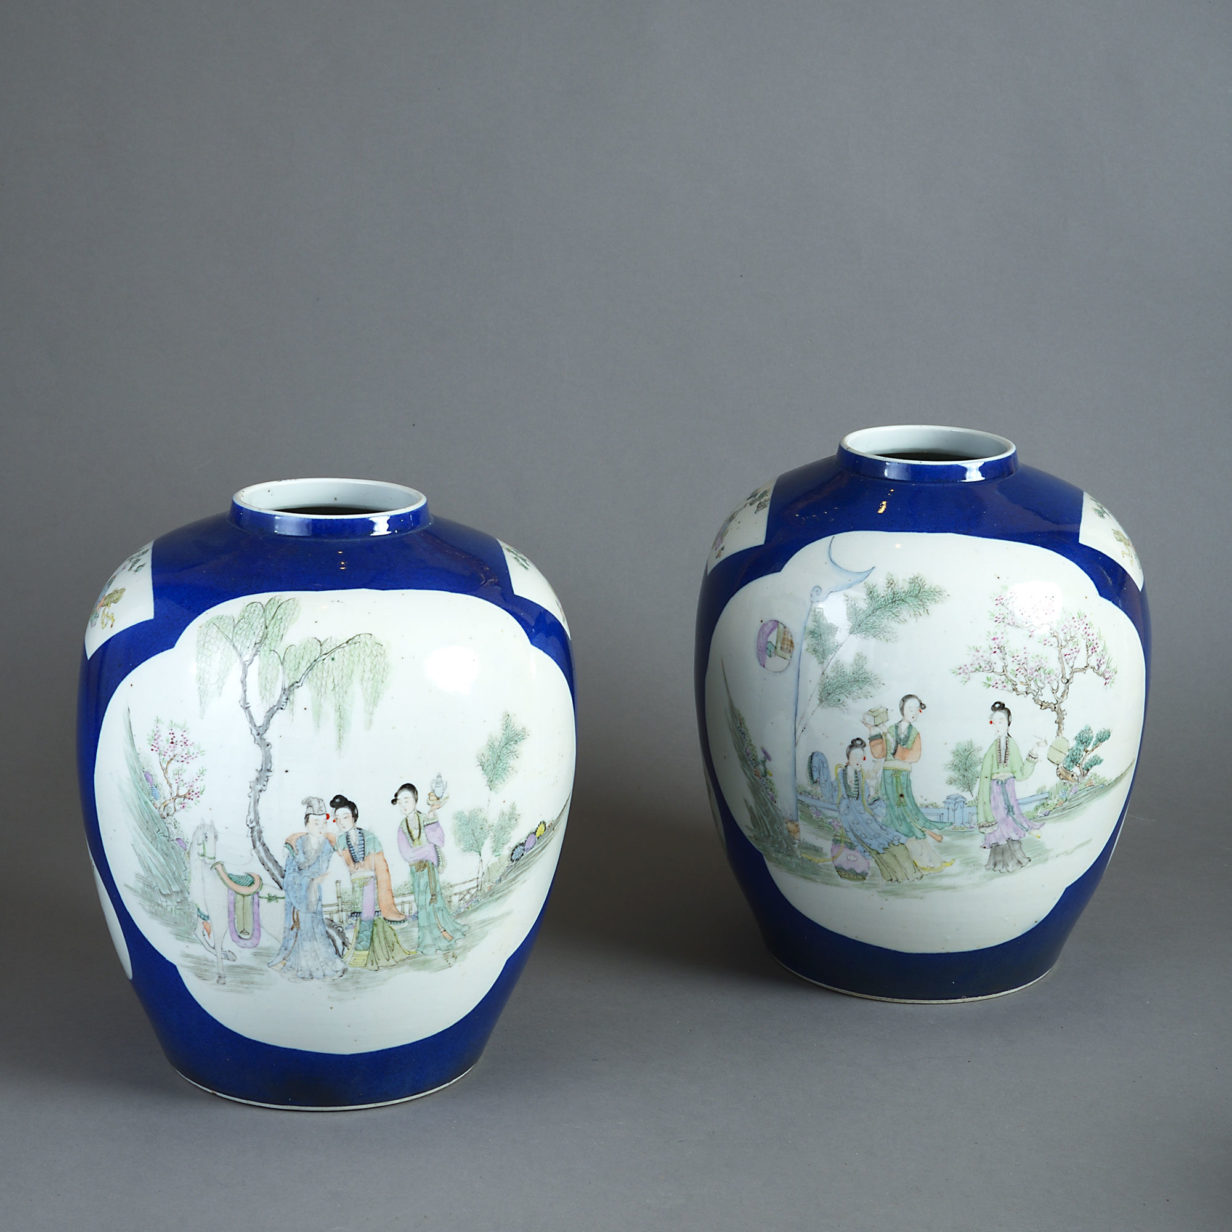 A pair of qing dynasty porcelain jar vases